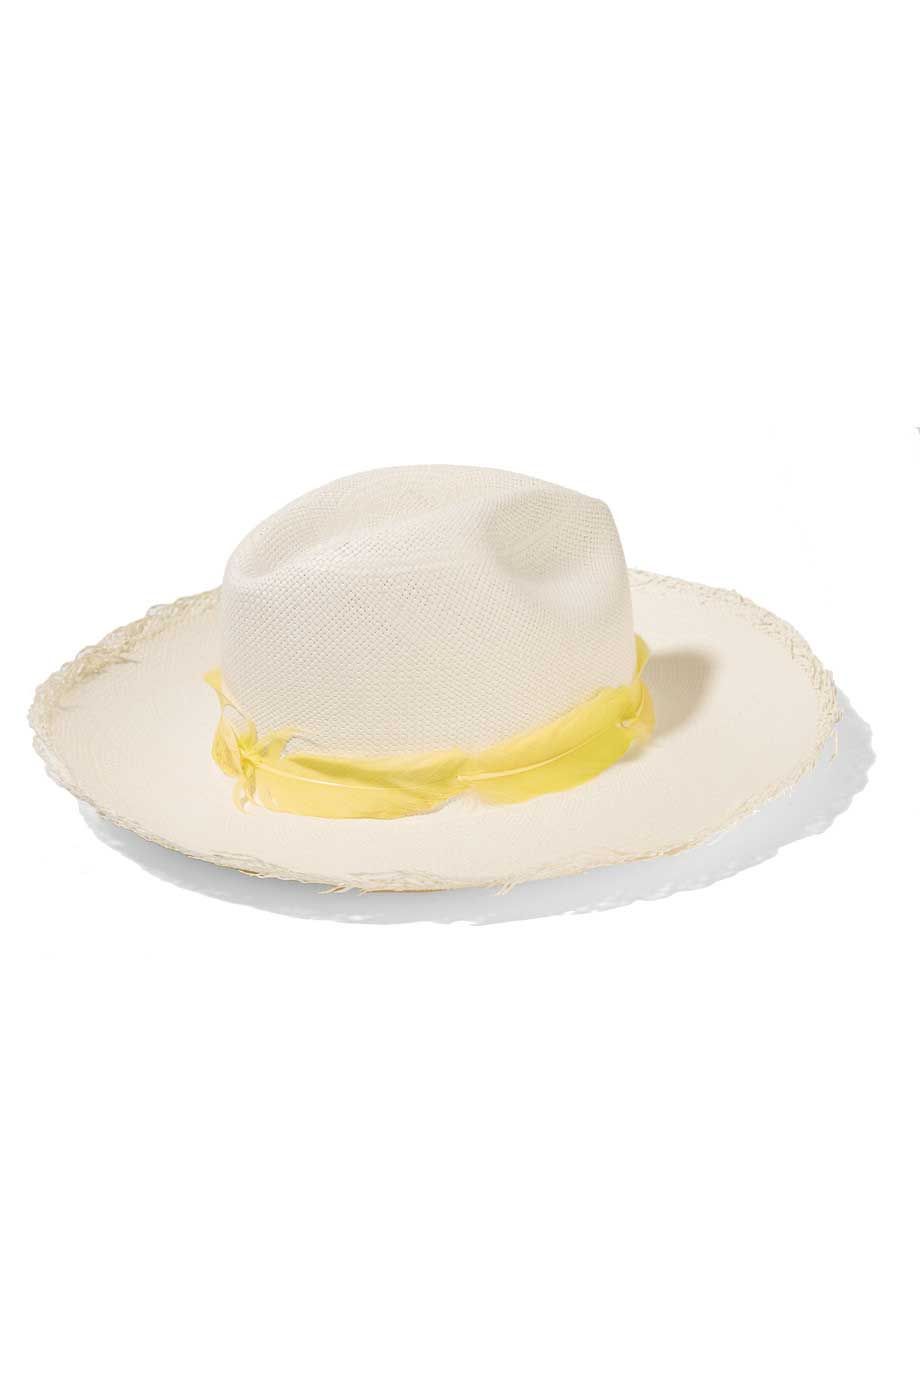 Sensi Studio Feather-Trimmed Toquilla Straw Panama Hat